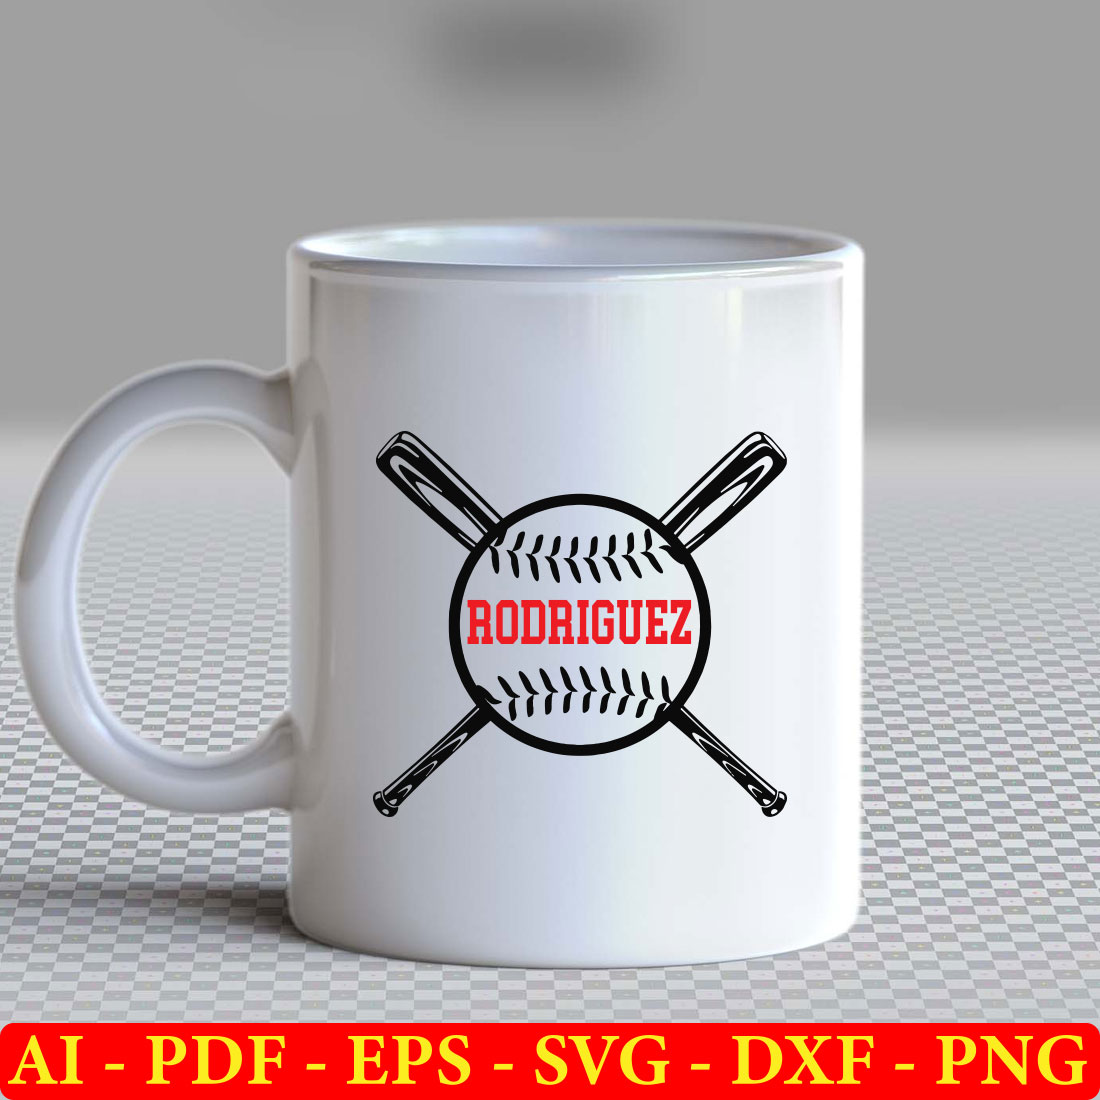 White coffee mug with a baseball and bats on it.